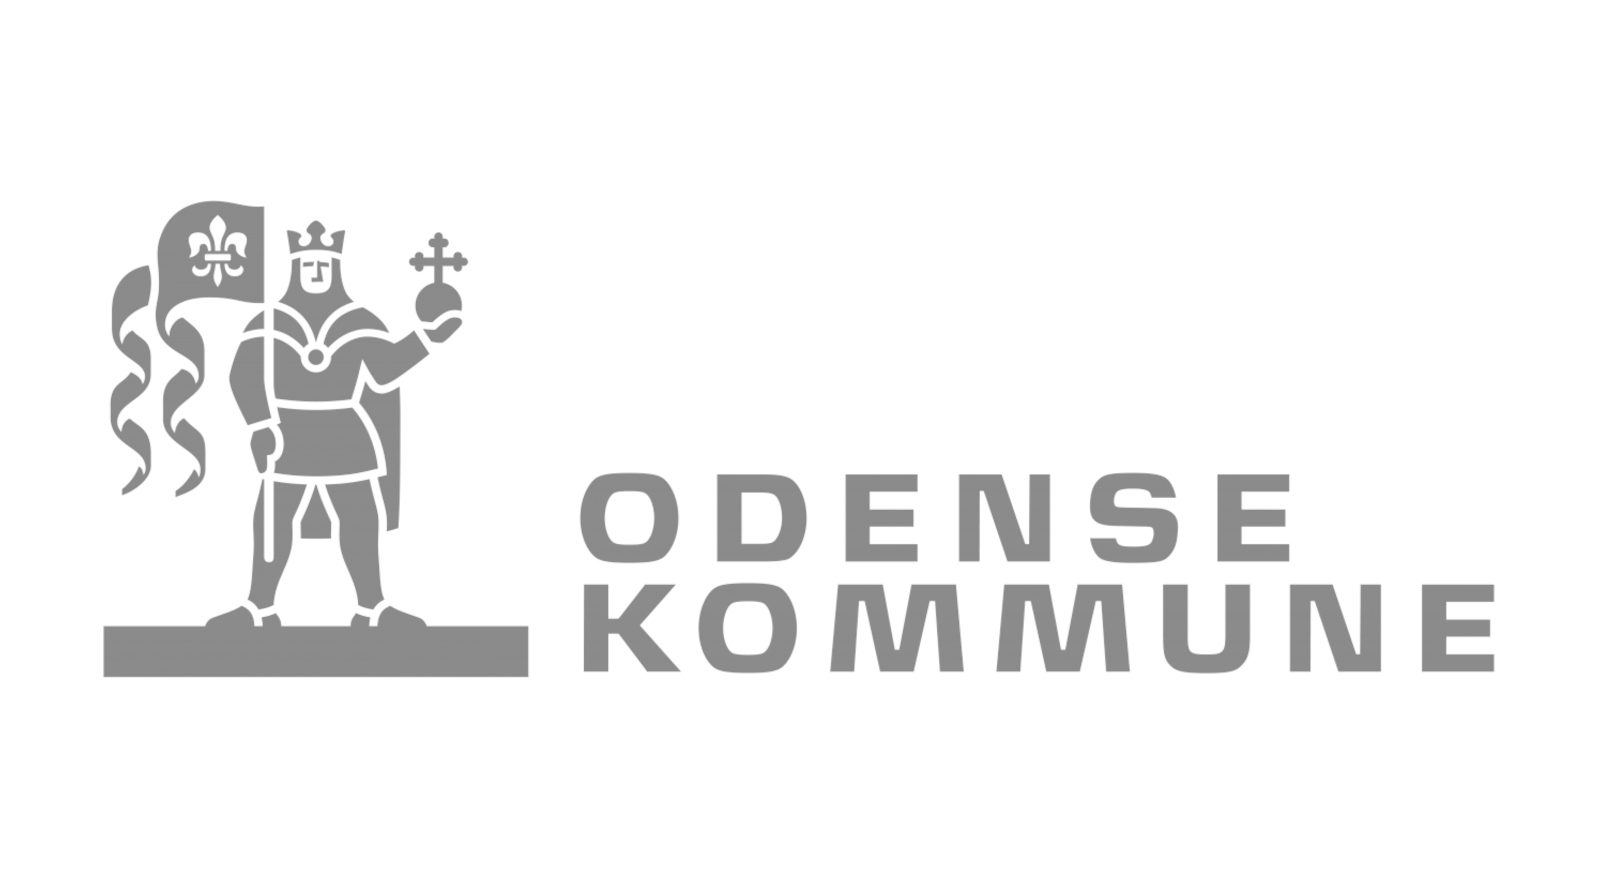 odense-kommune-grayscaled